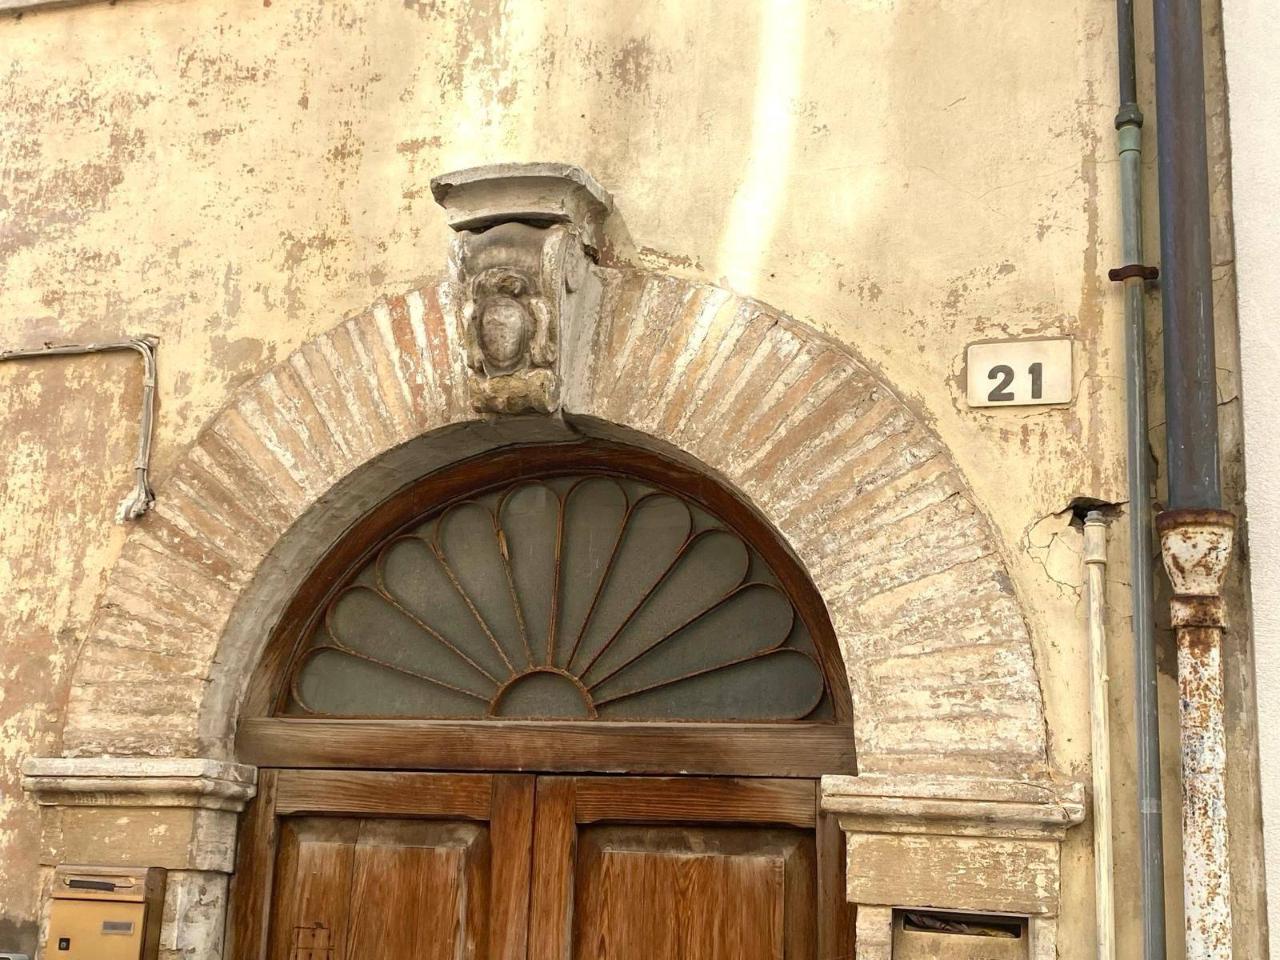 Casa indipendente in vendita a Pesaro